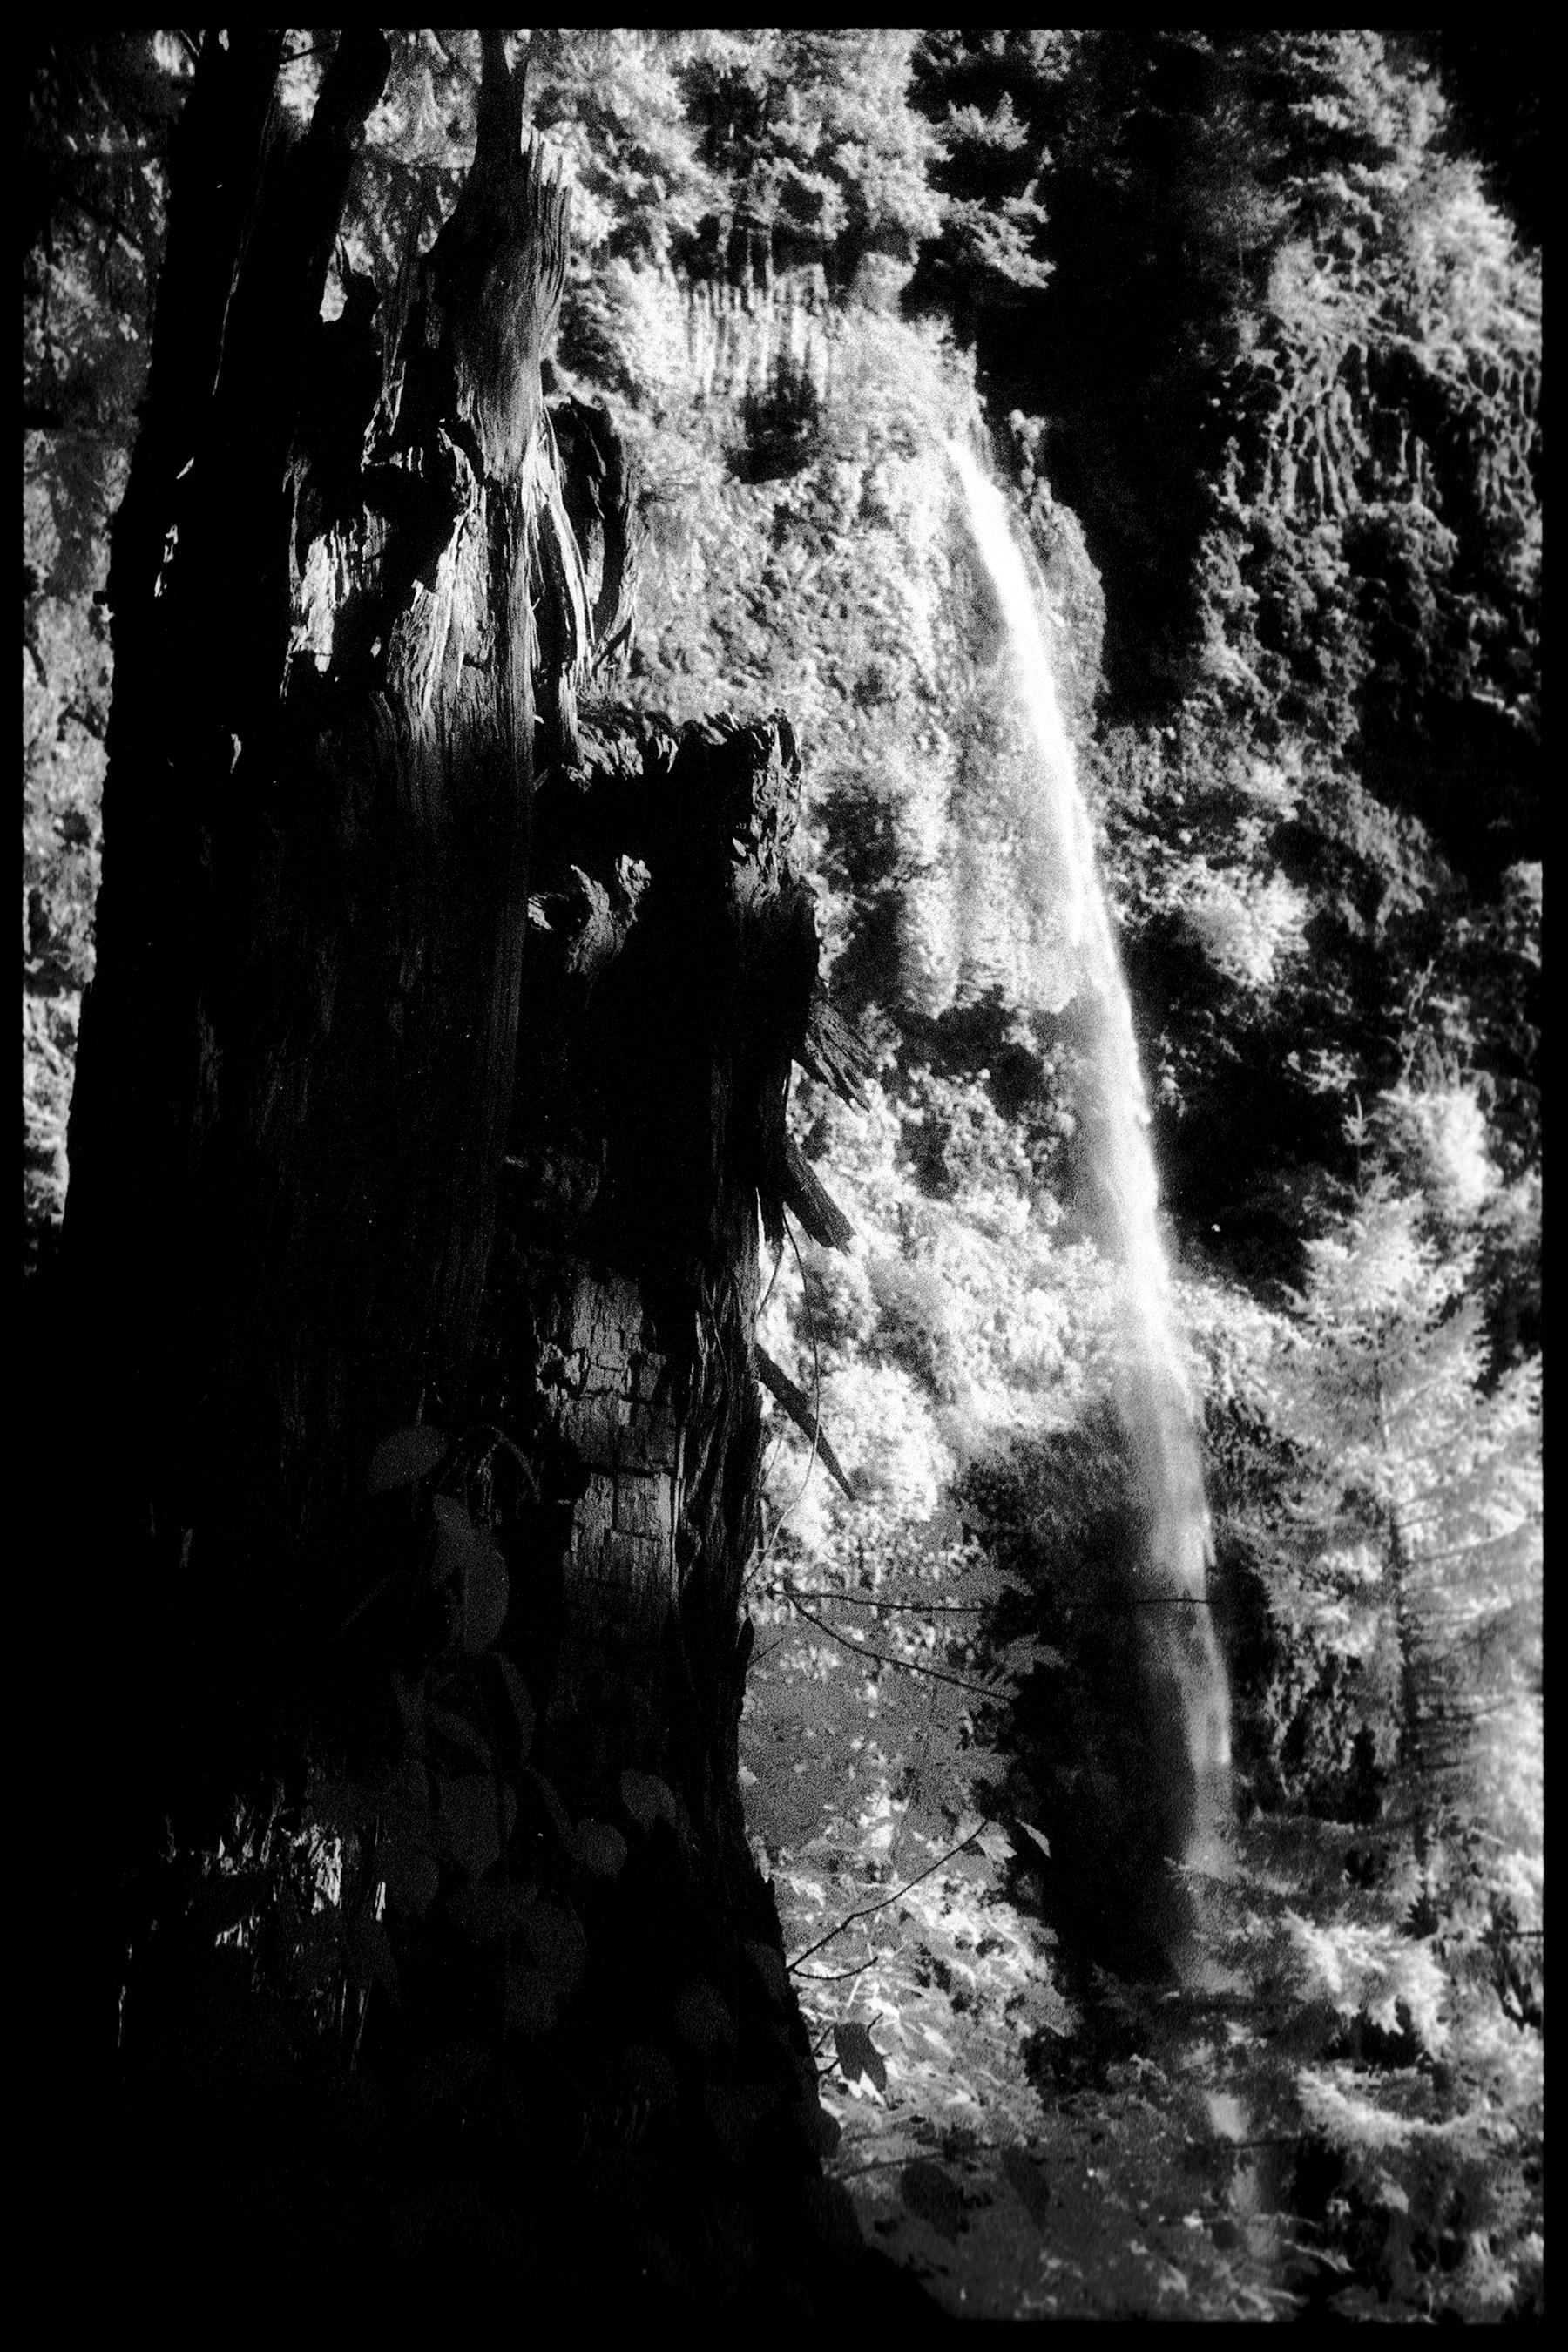 Edward Alfano Black and White Photograph - Multnomah Falls I - Black & White Photograph of Oregon National Park